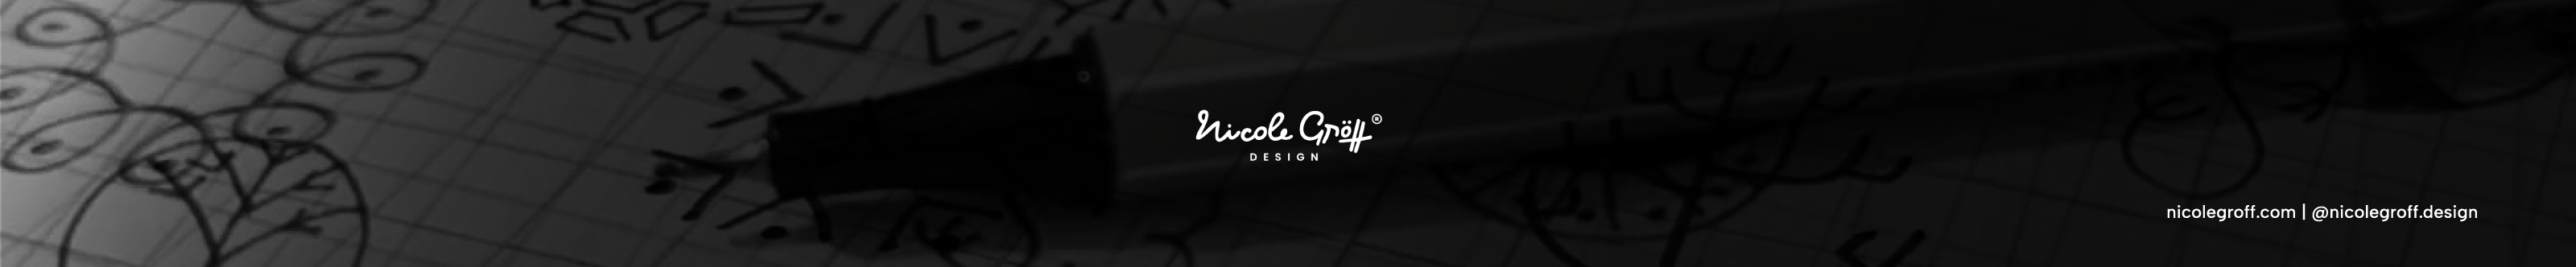 Nicole Gröff's profile banner